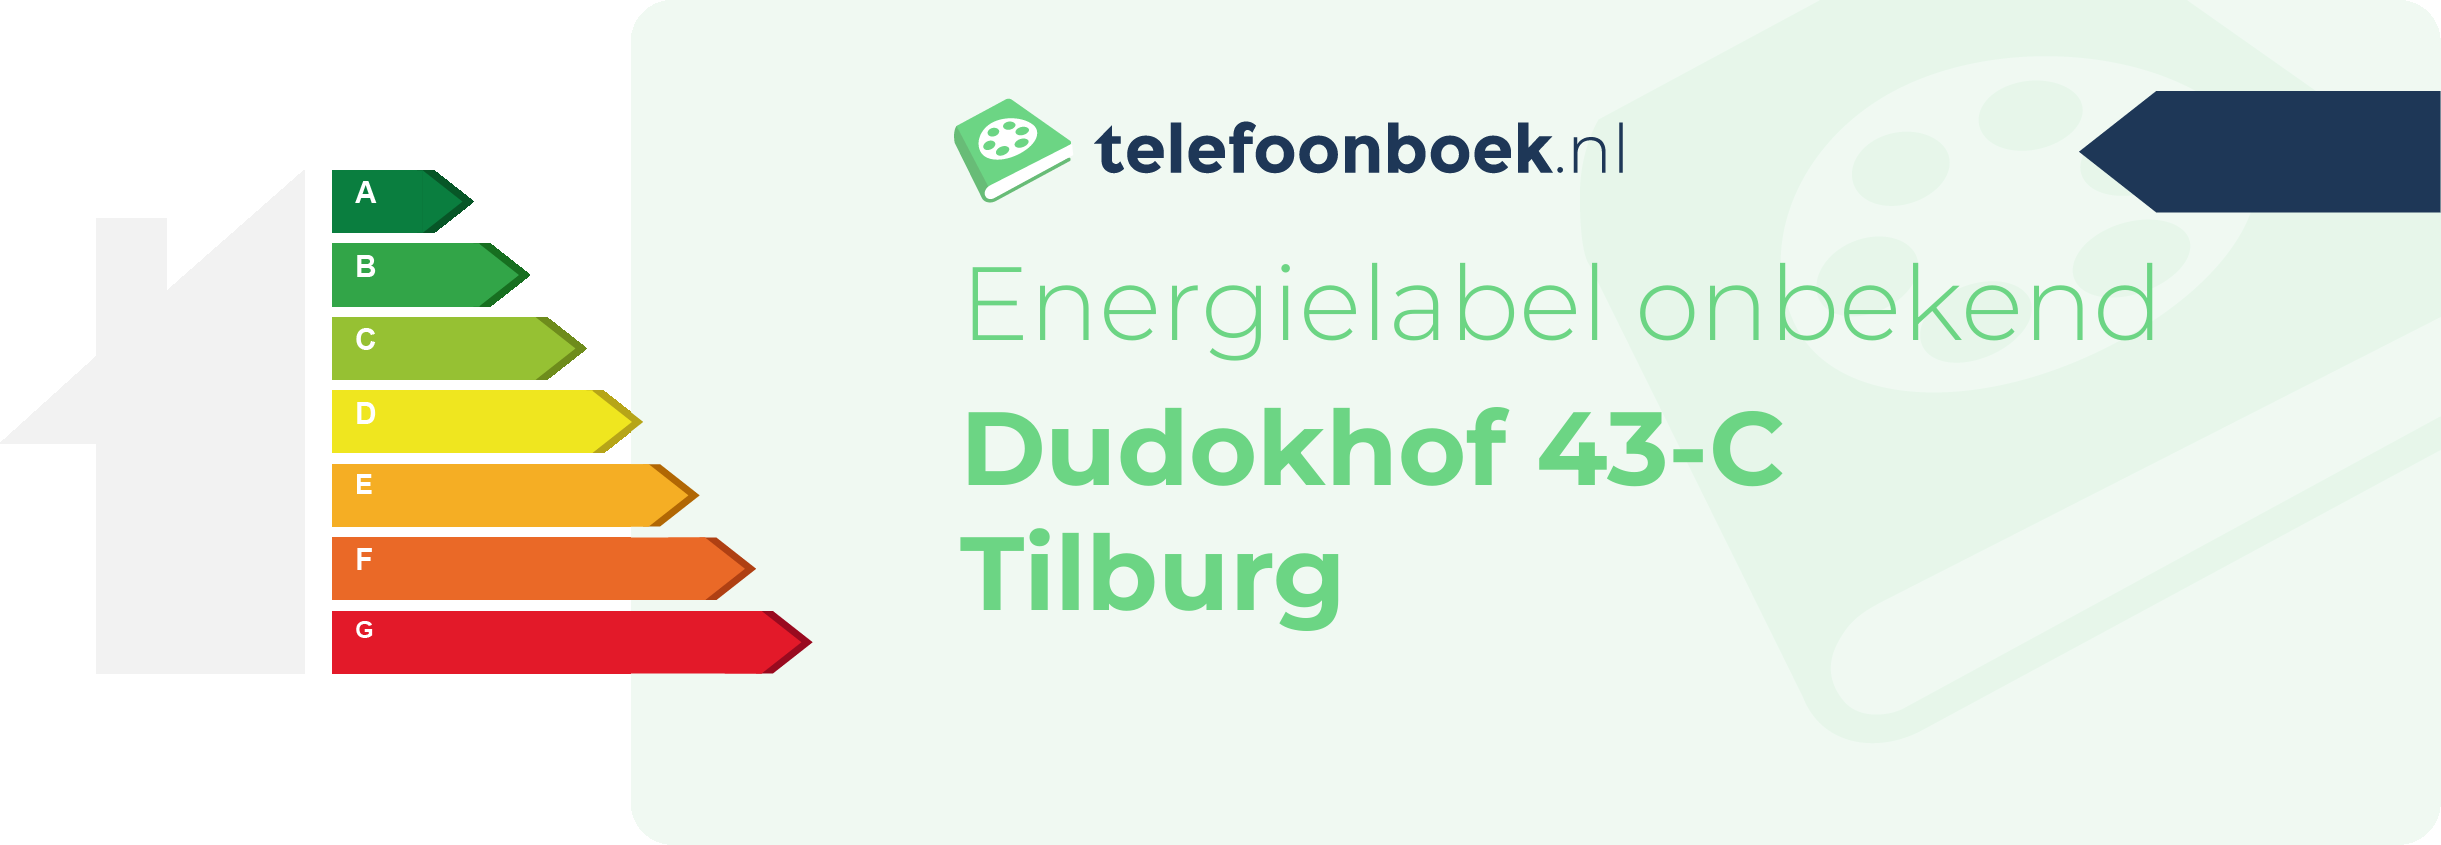 Energielabel Dudokhof 43-C Tilburg